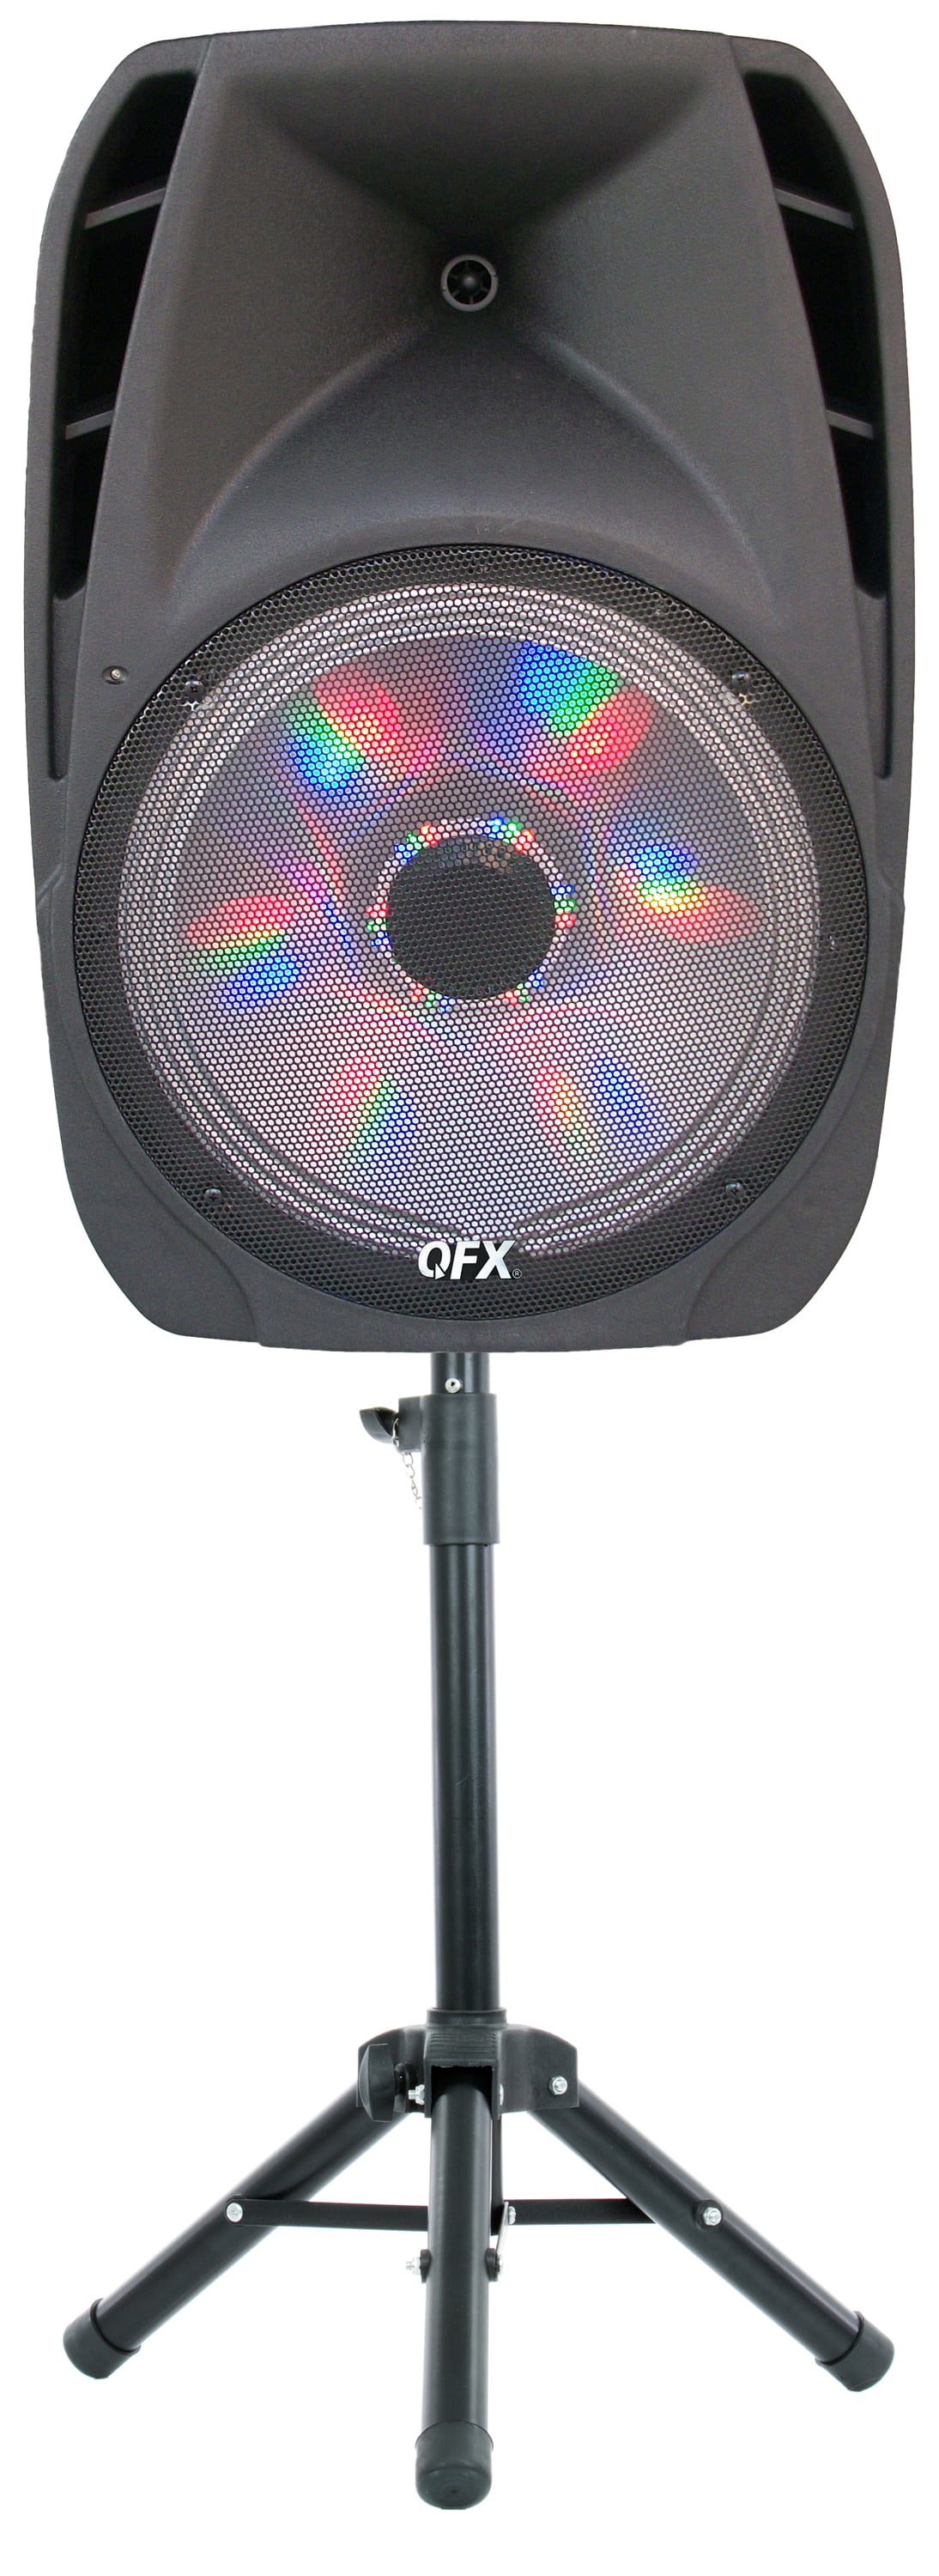 qfx party speaker